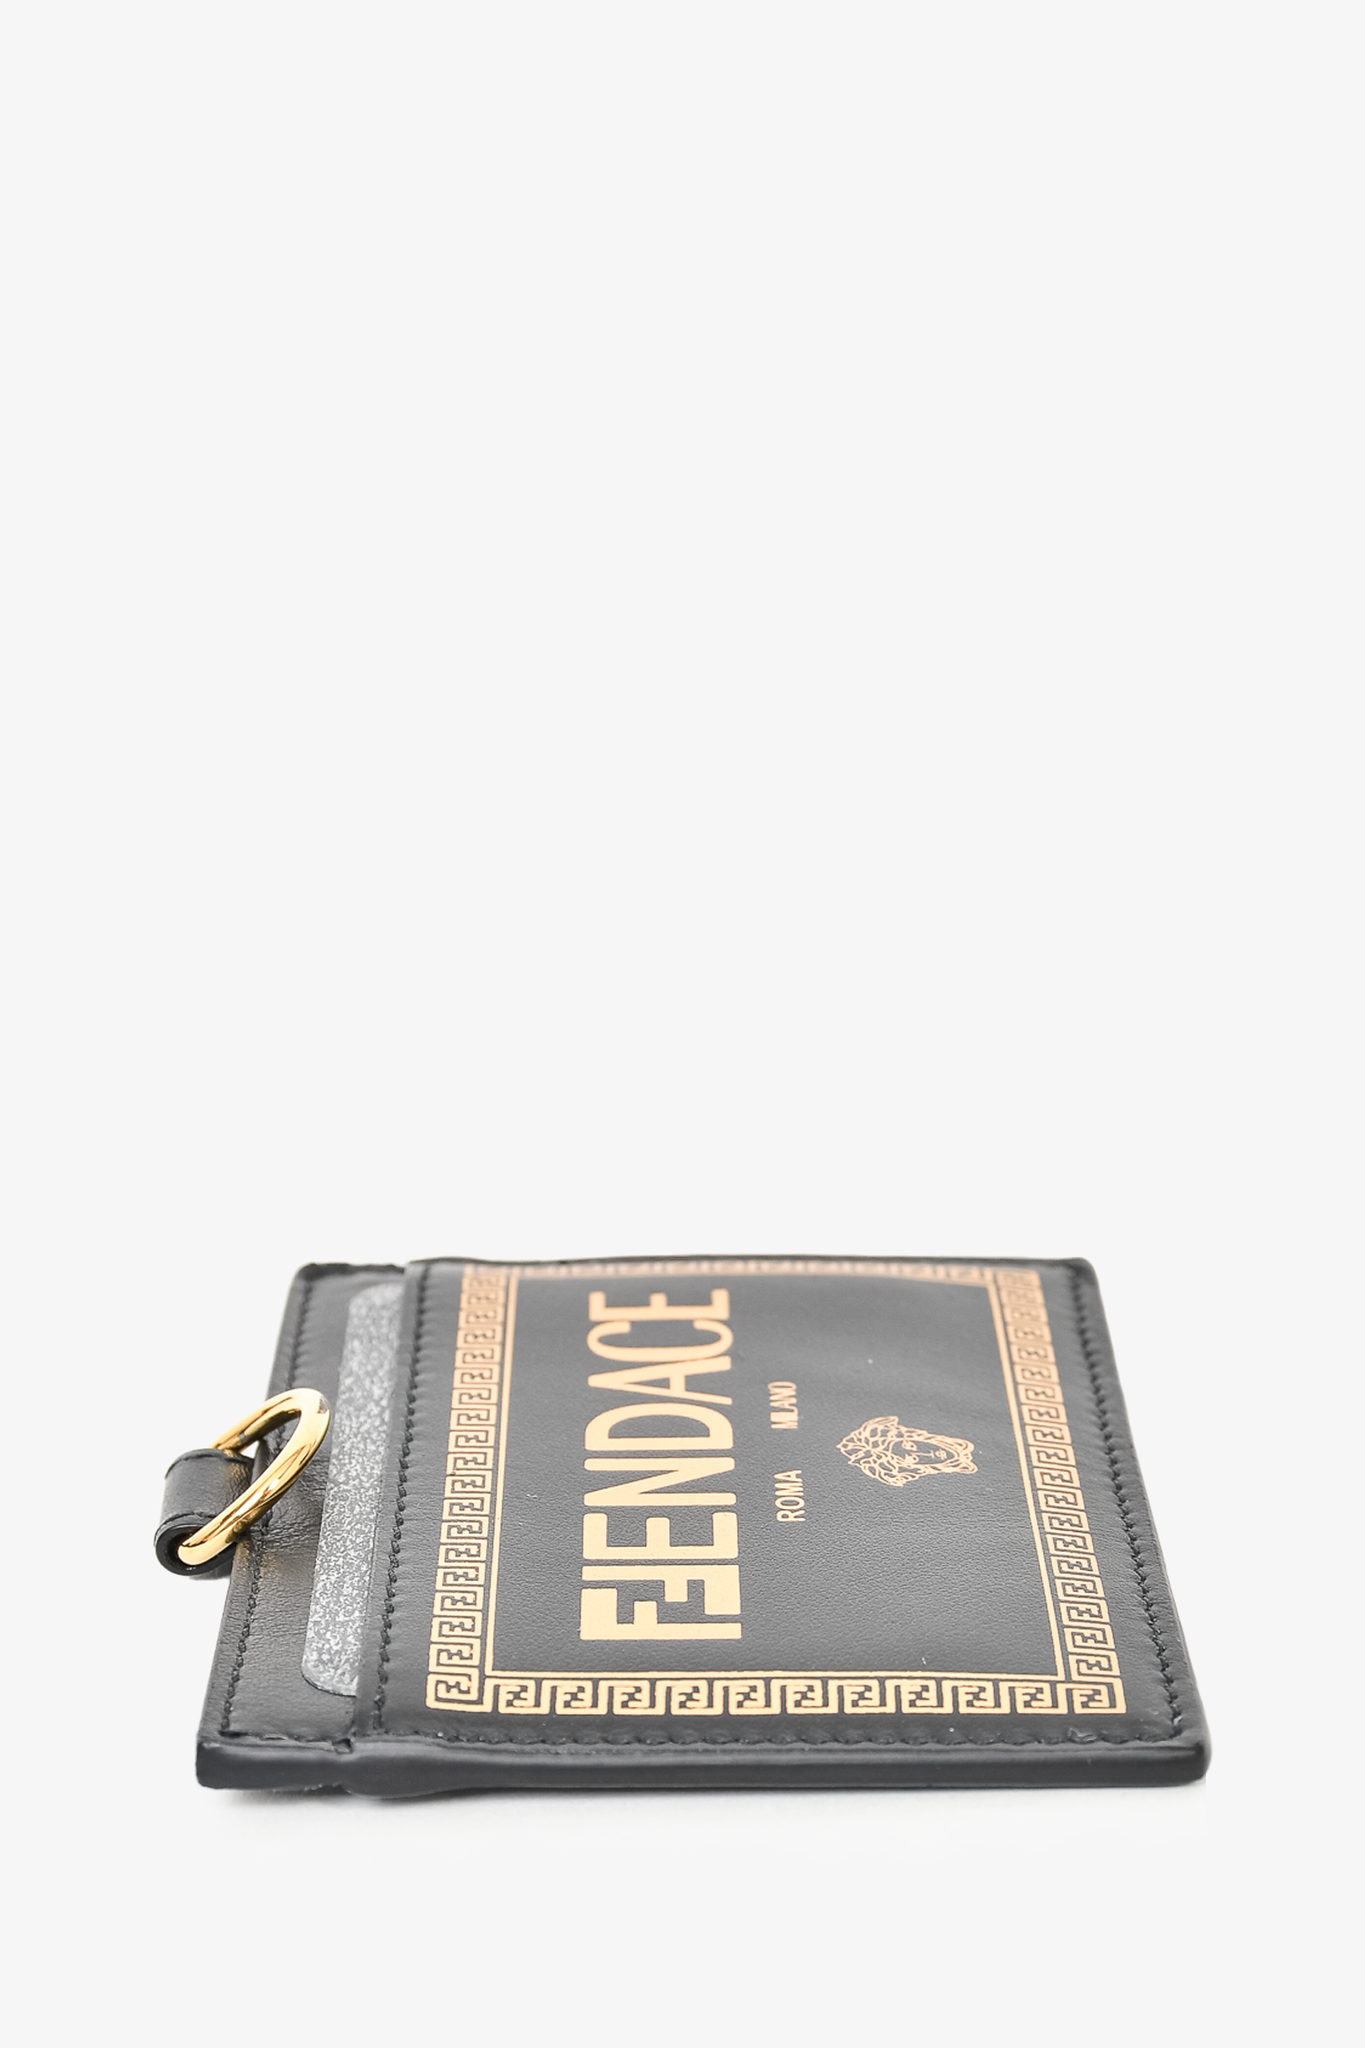 Fendi x Versace Fendace Lanyard Card Holder Printed Leather Black